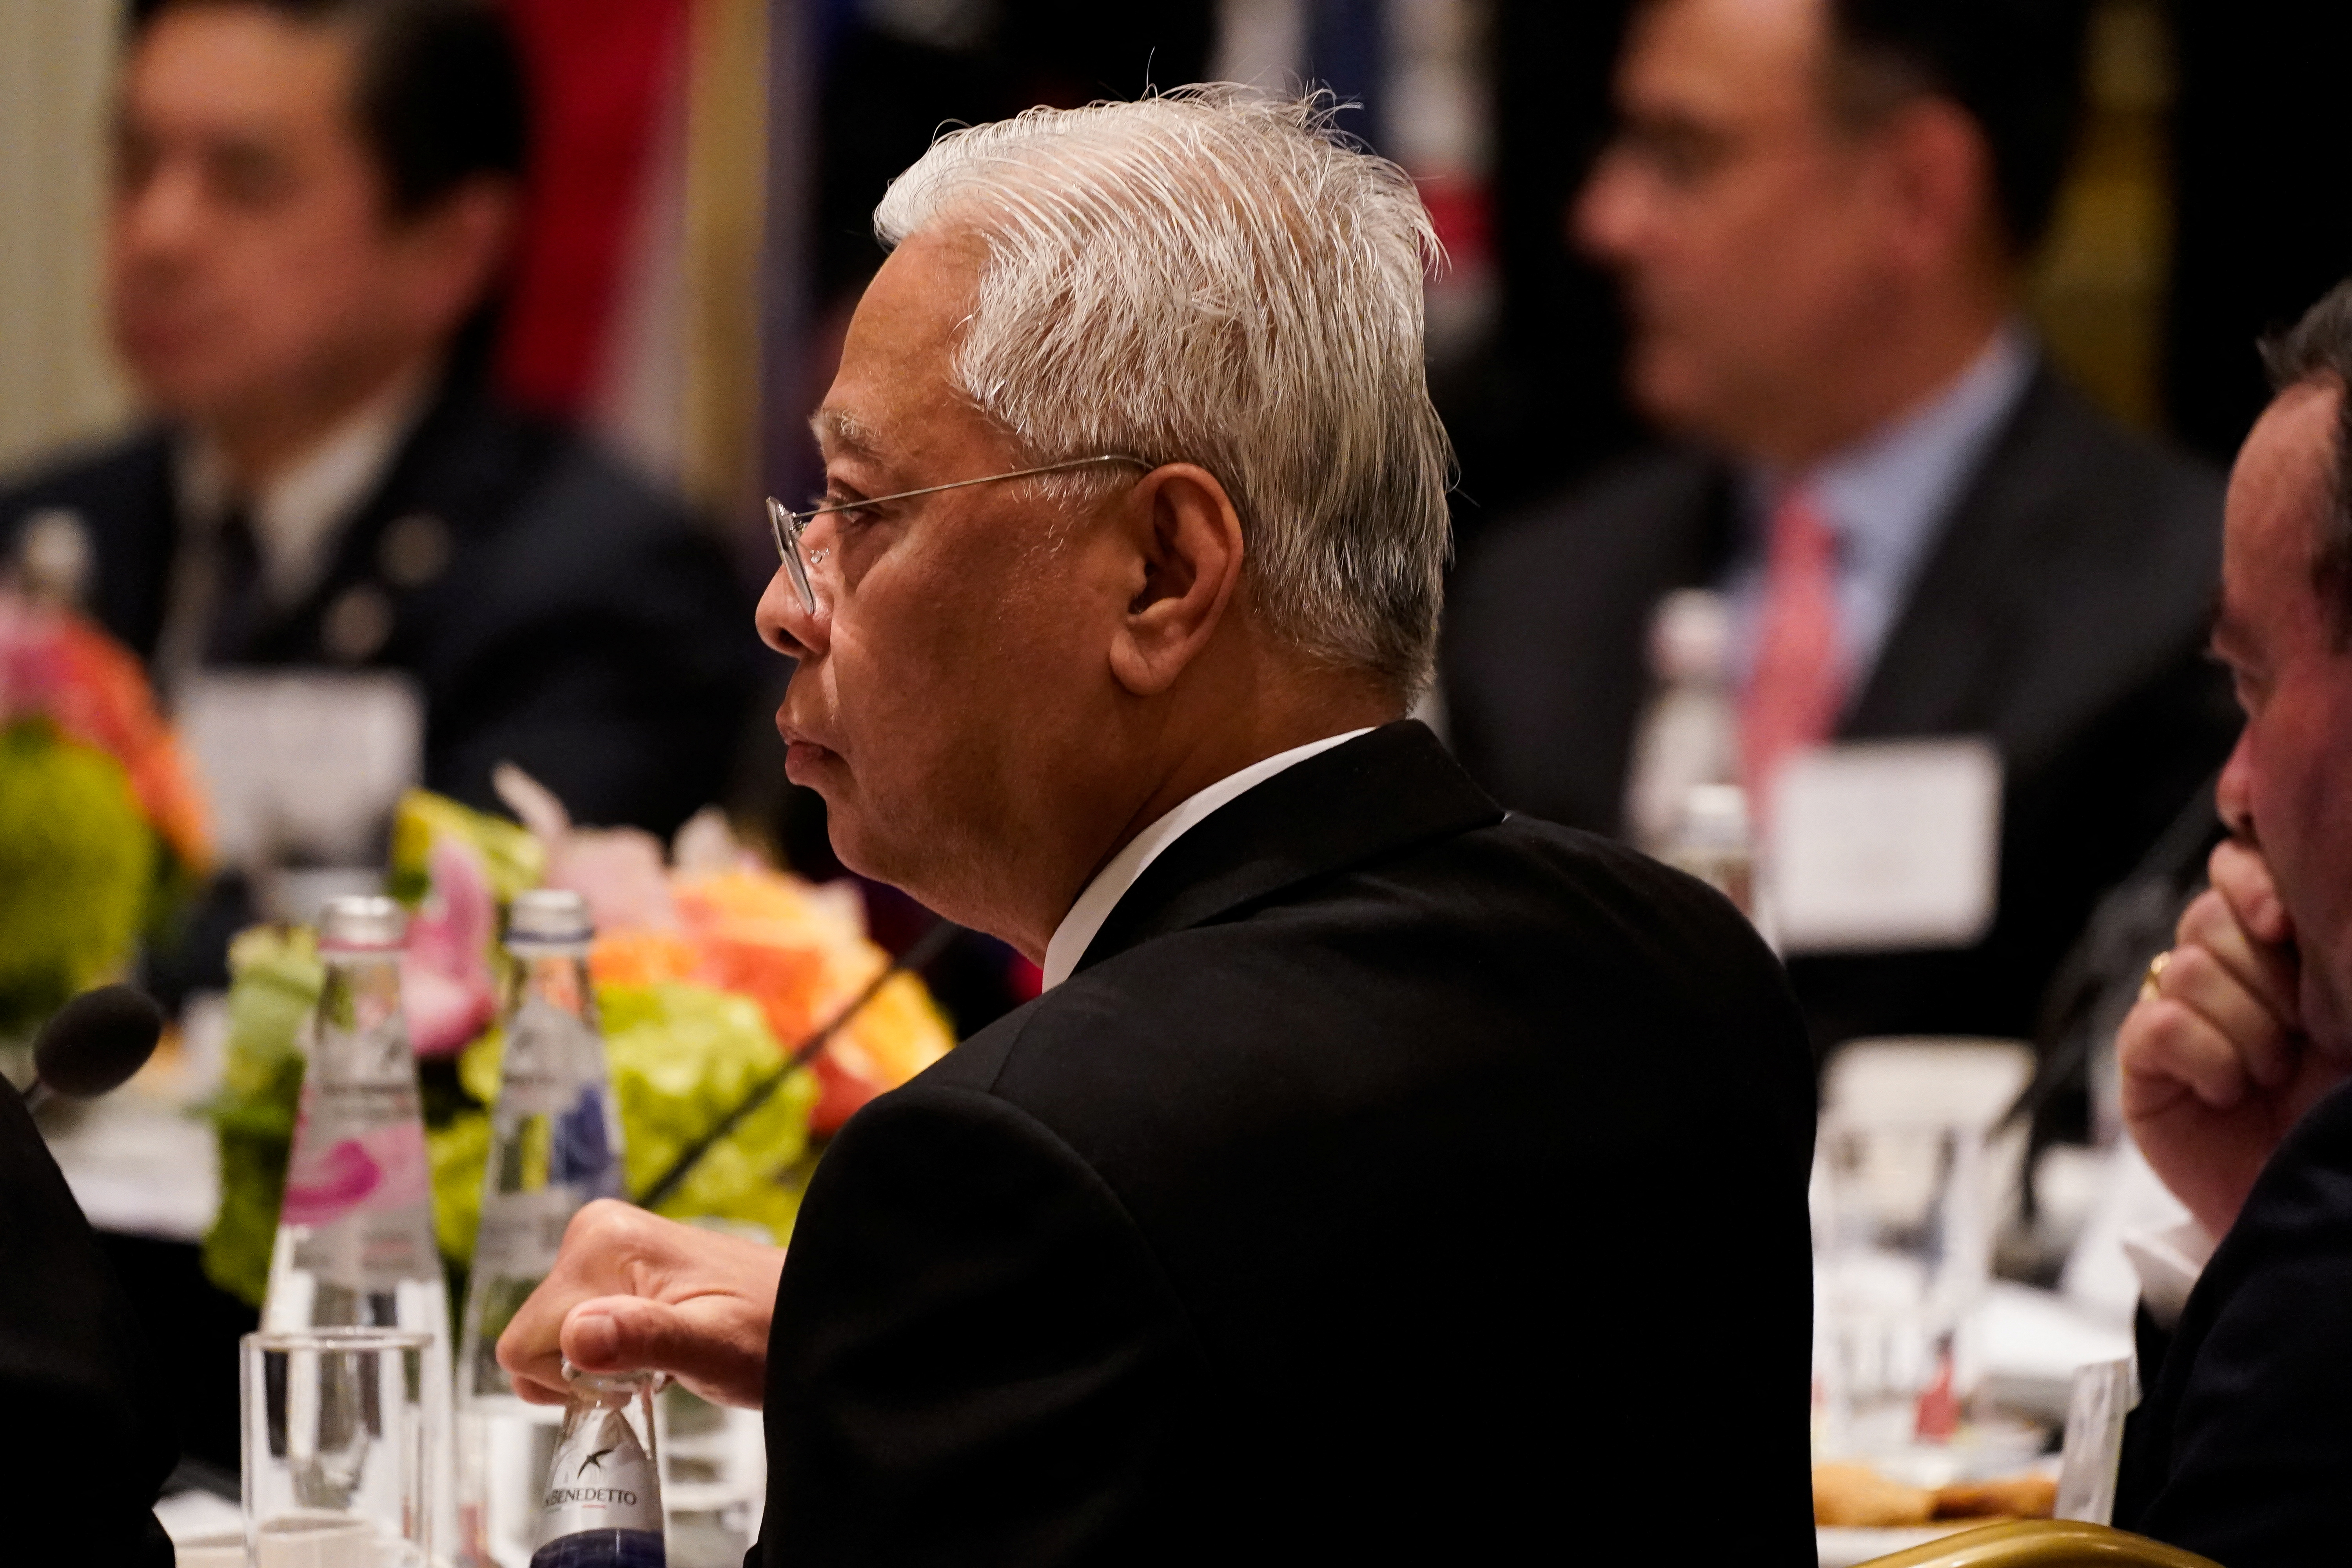 U.S.- ASEAN Special Summit, in Washington